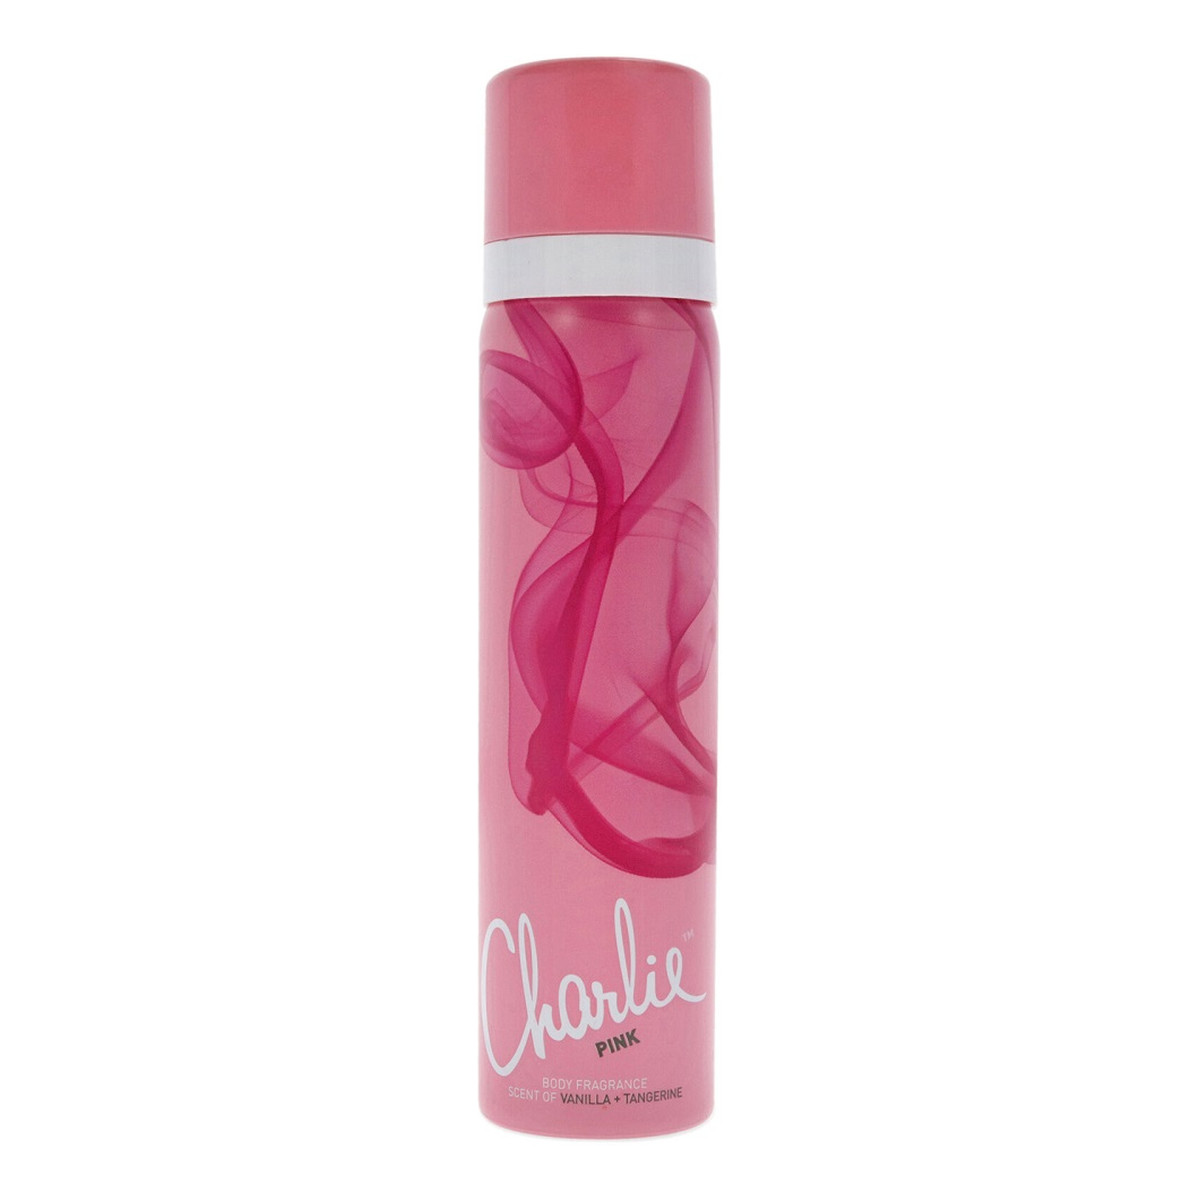 Revlon Charlie Pink Dezodorant spray 75ml